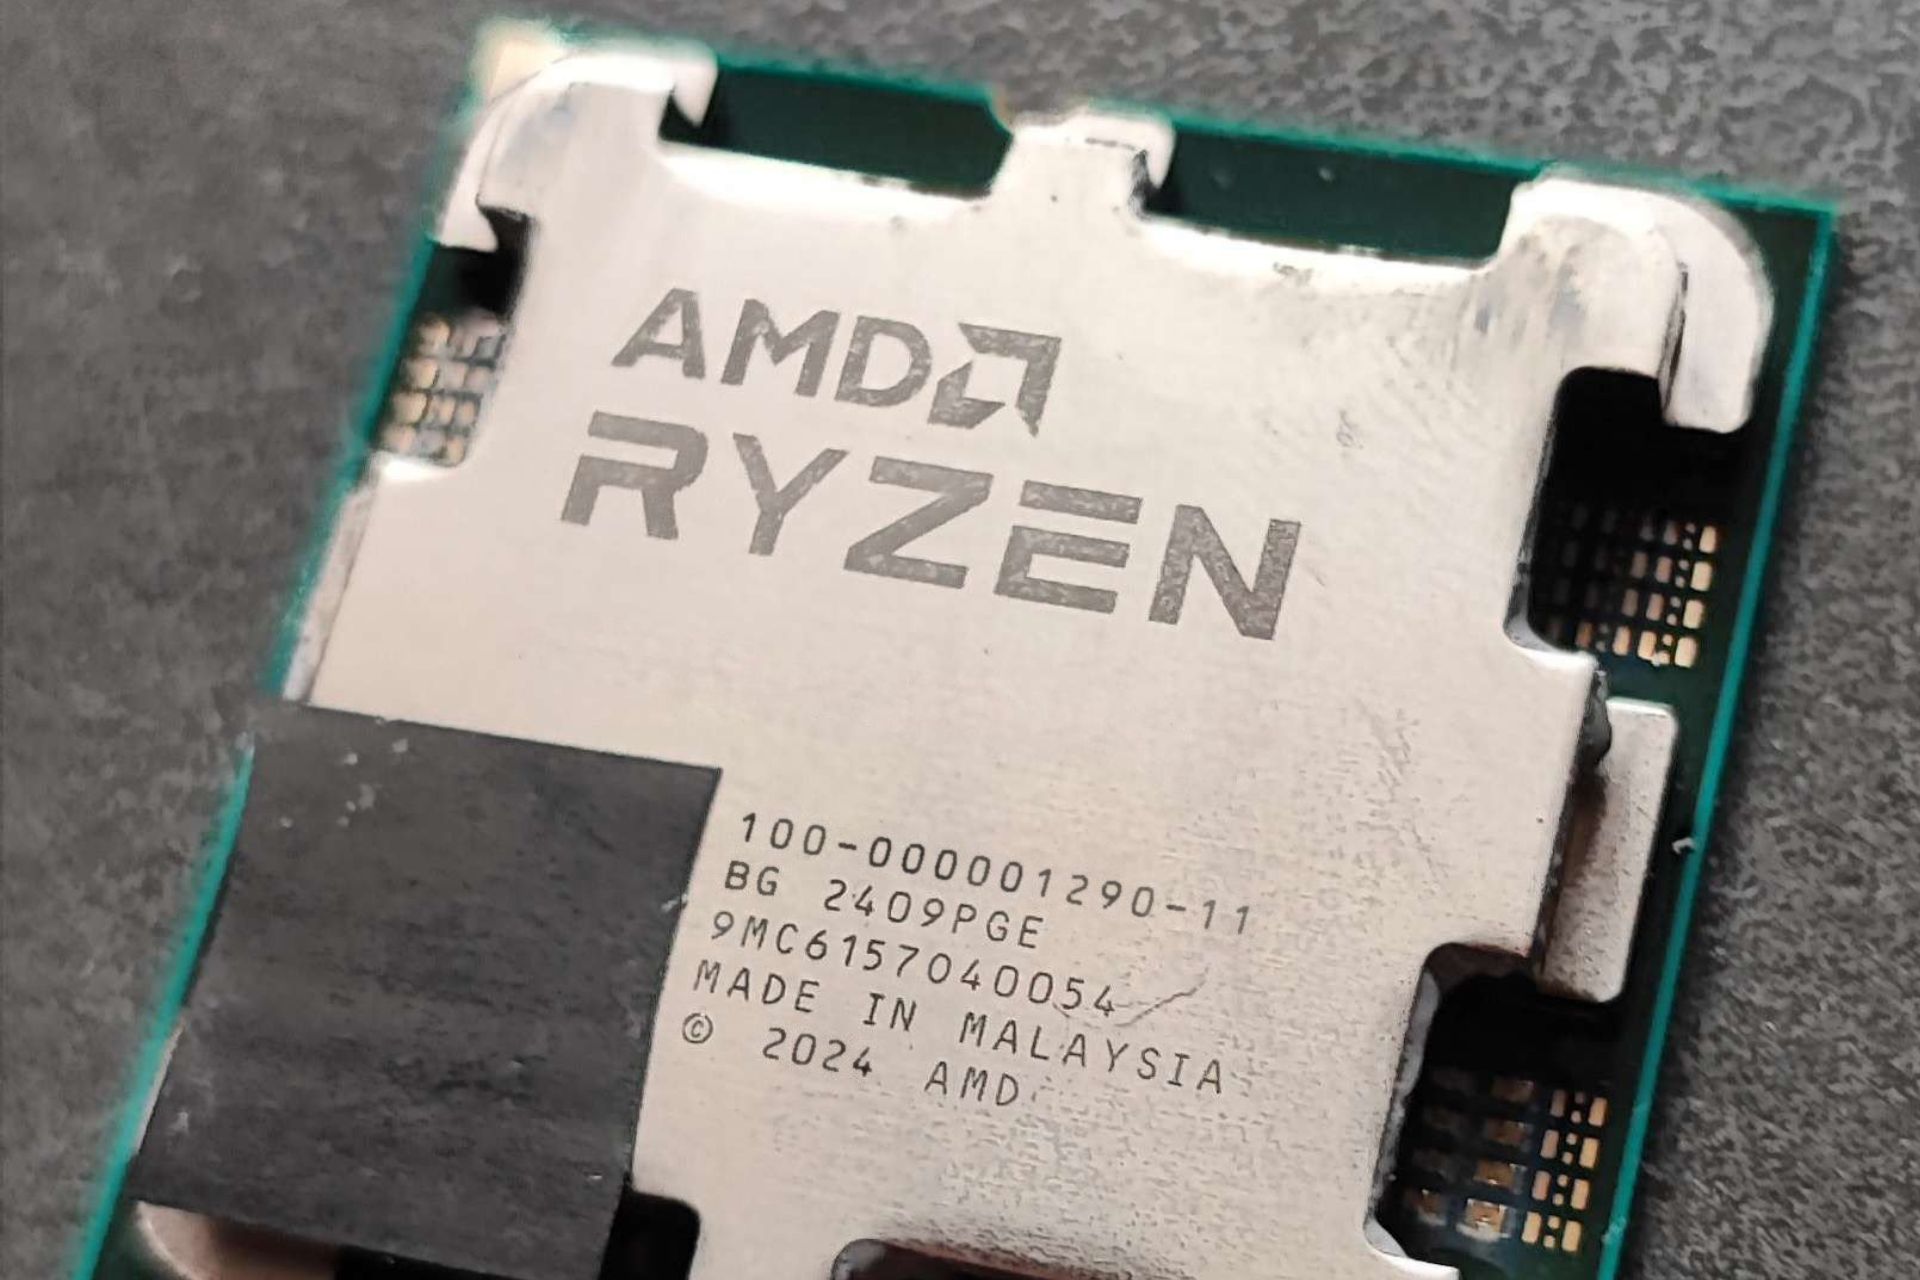 An alleged image of AMD 5 Ryzen 'Granite Ridge' Desktop CPU is leaked online